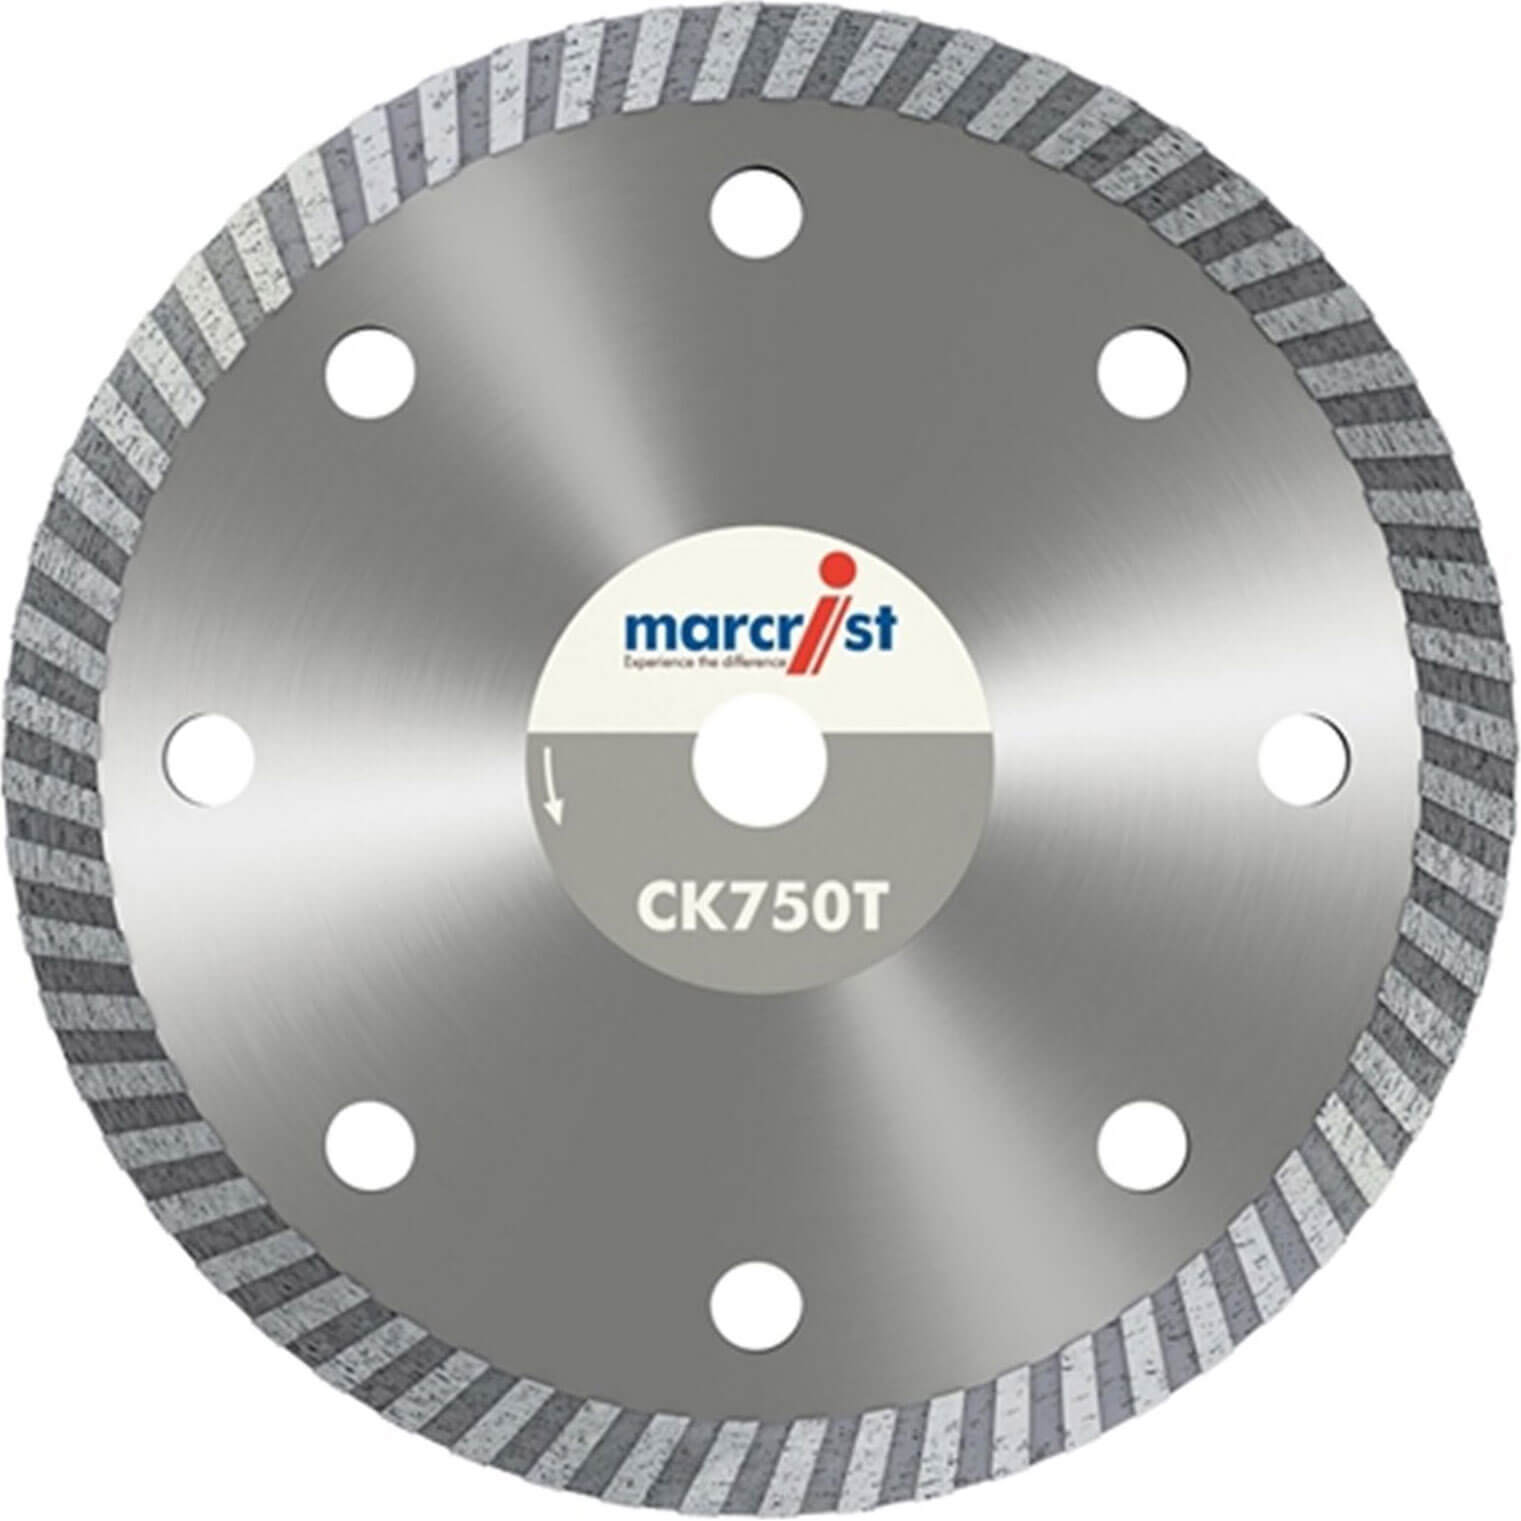 Photo of Marcrist Ck750t Ultra Thin Turbo Tile Diamond Cutting Disc 115mm